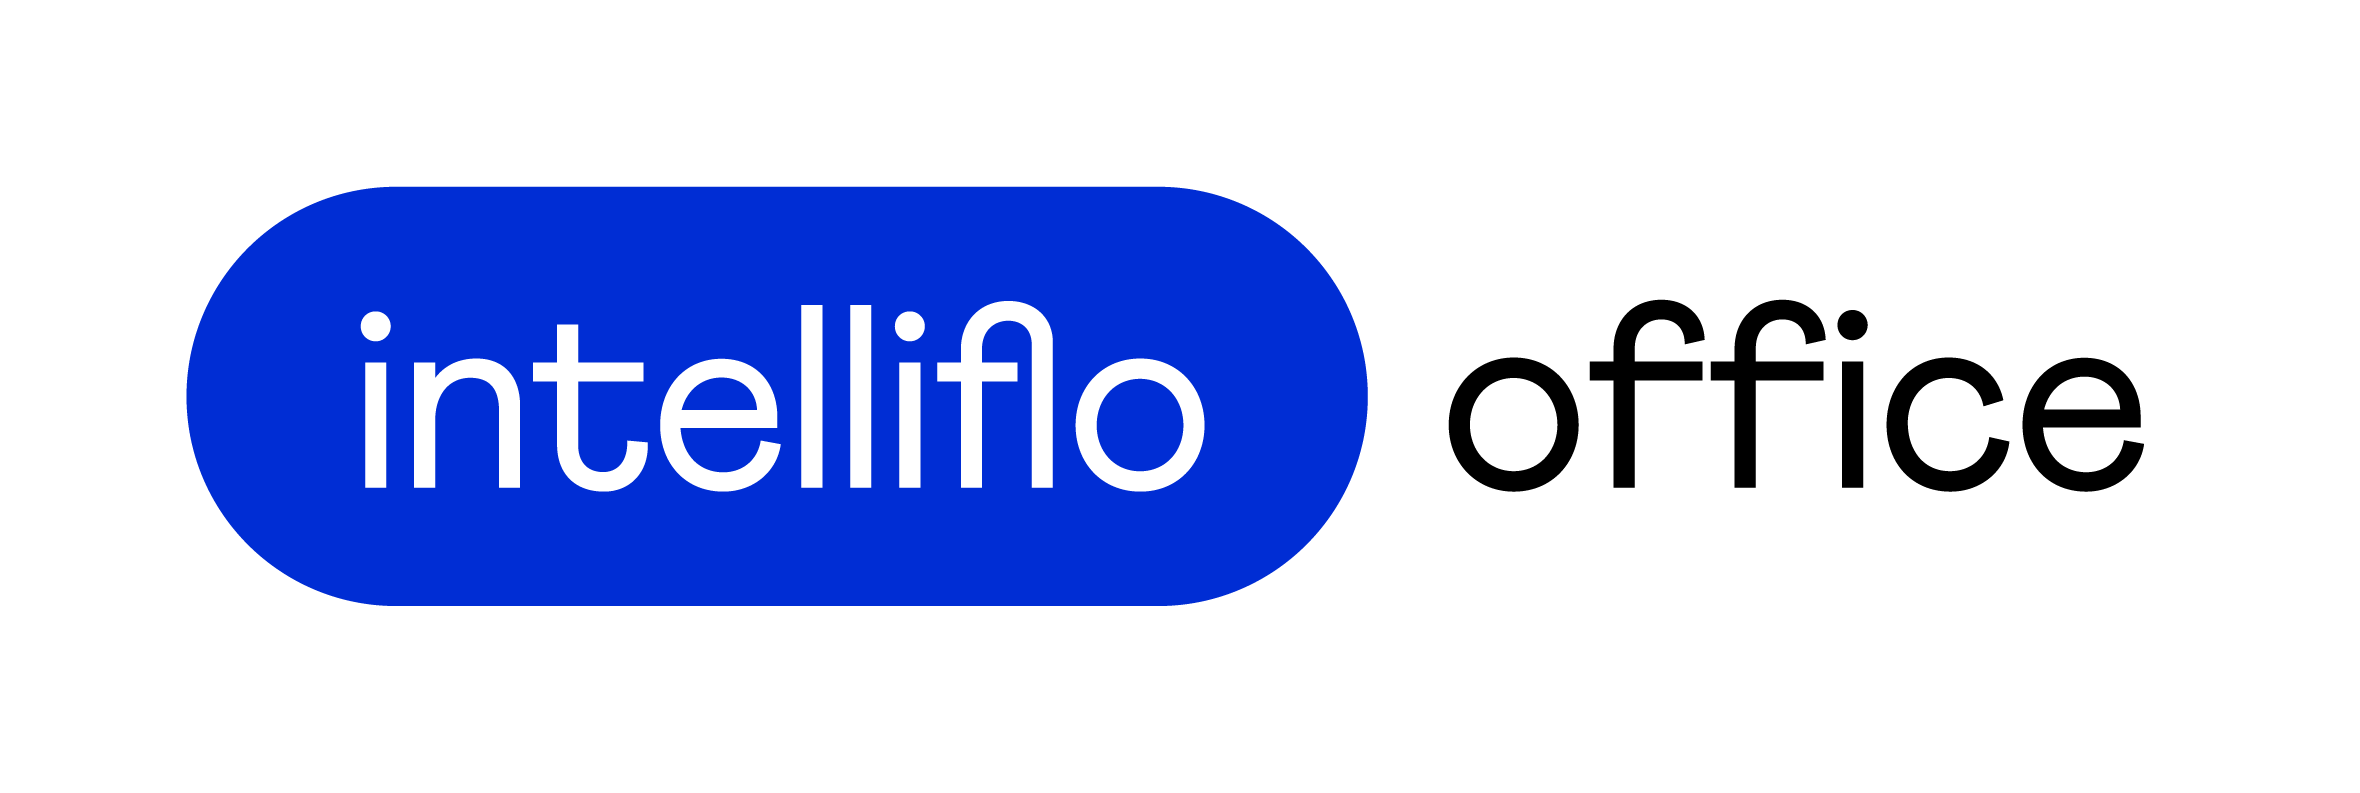 Intelliflo.png_logo